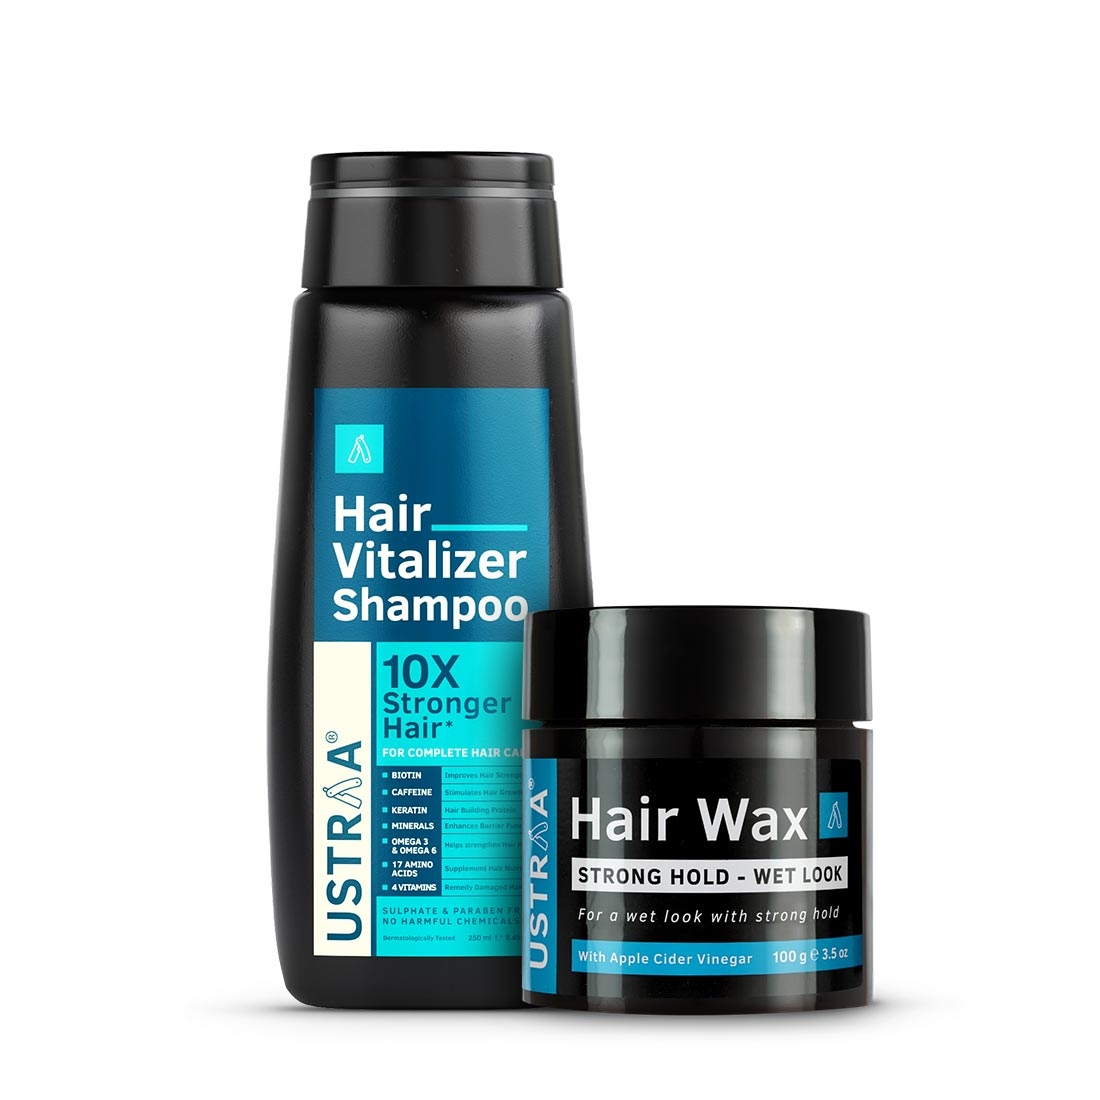 Ustraa Hair Vitalizer Shampoo - 250ml & Hair Wax - Strong Hold, Wet Look - 100g